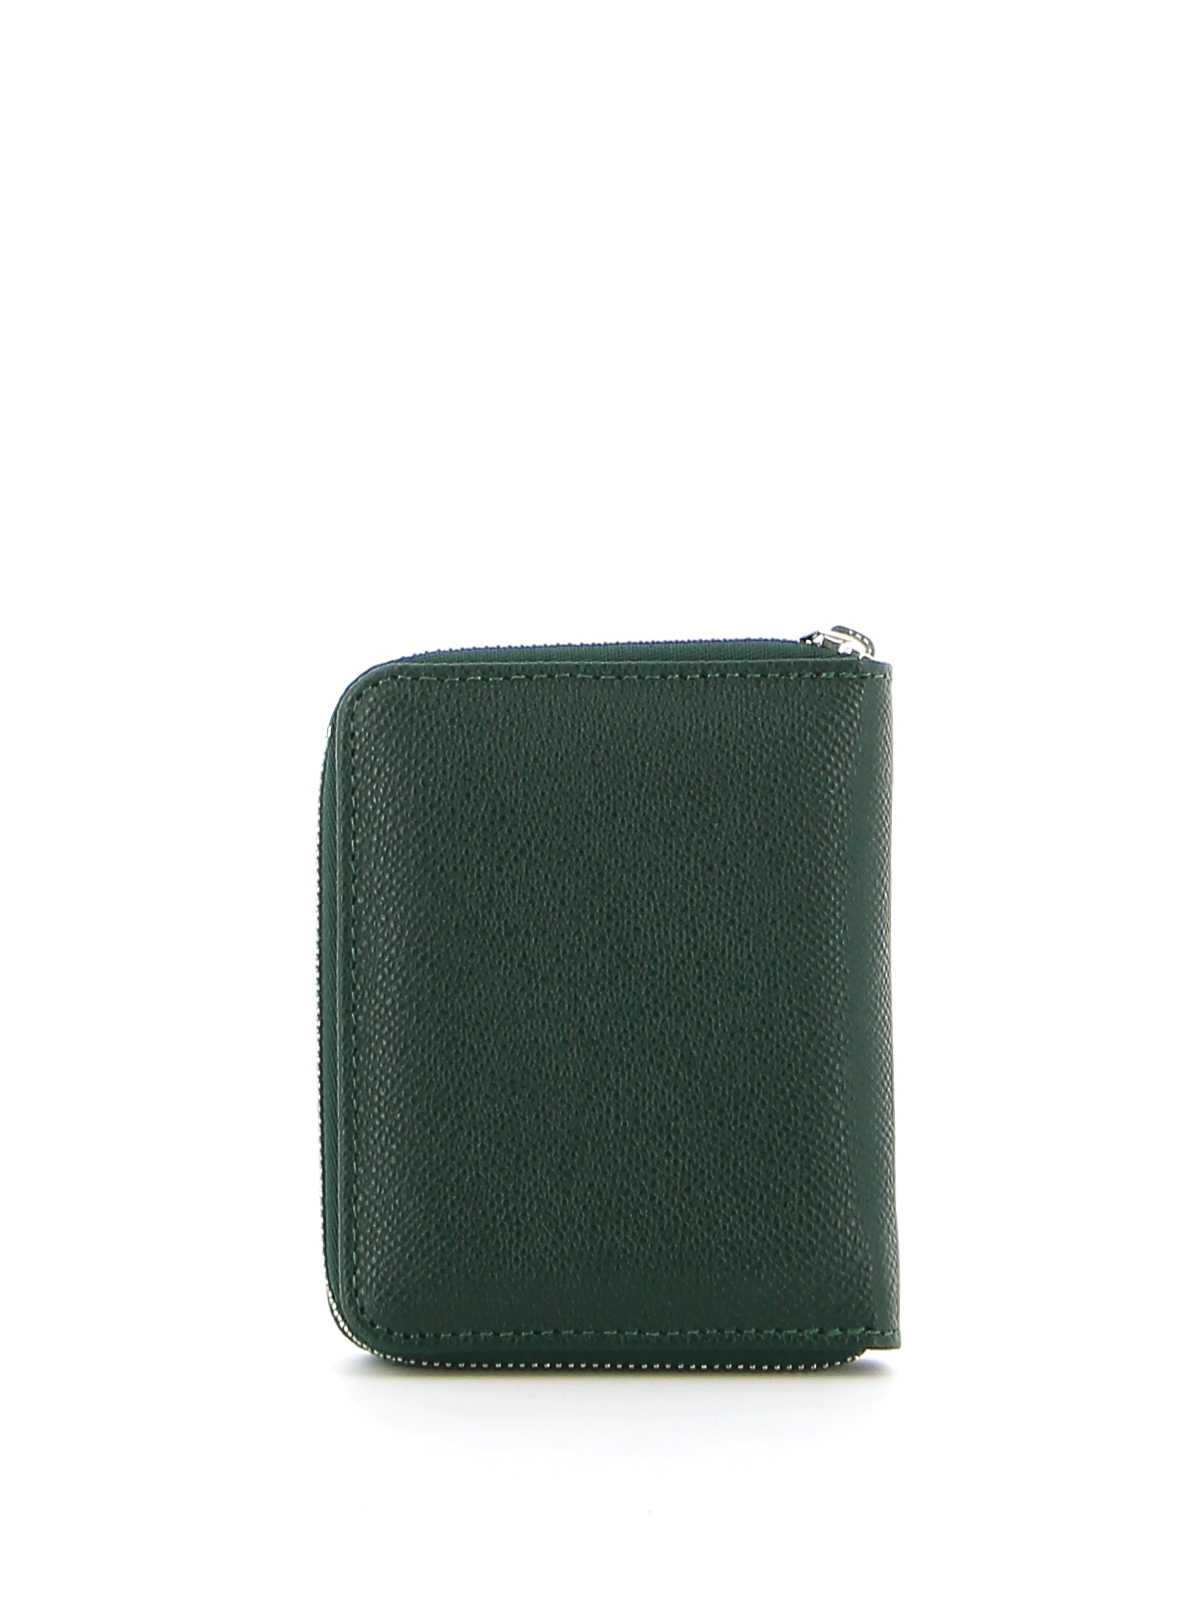 財布＆ポーチ Ami Paris - 財布 - 緑 - H20A001810300